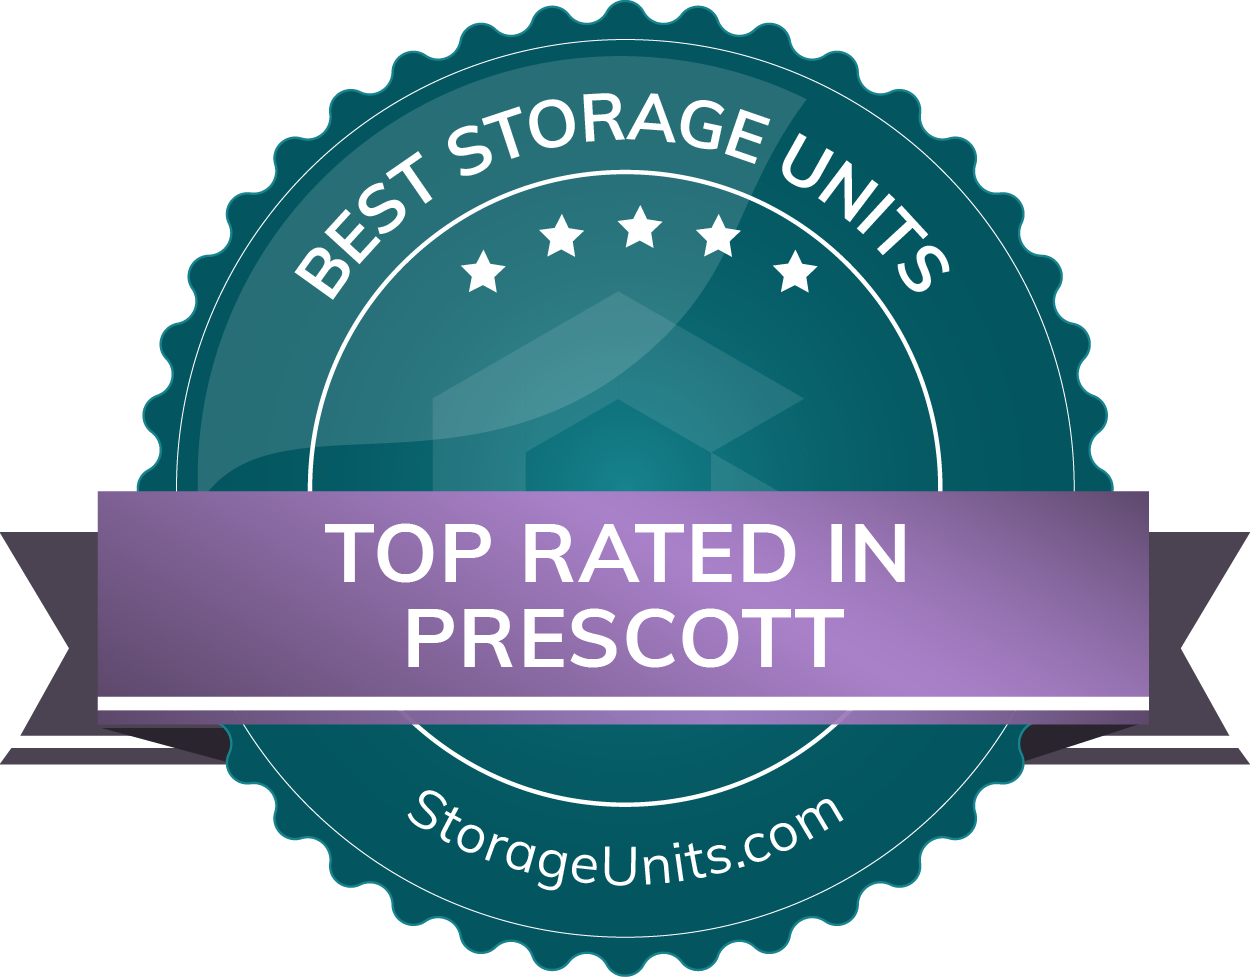 Best Self Storage Units in Prescott, Arizona of 2022